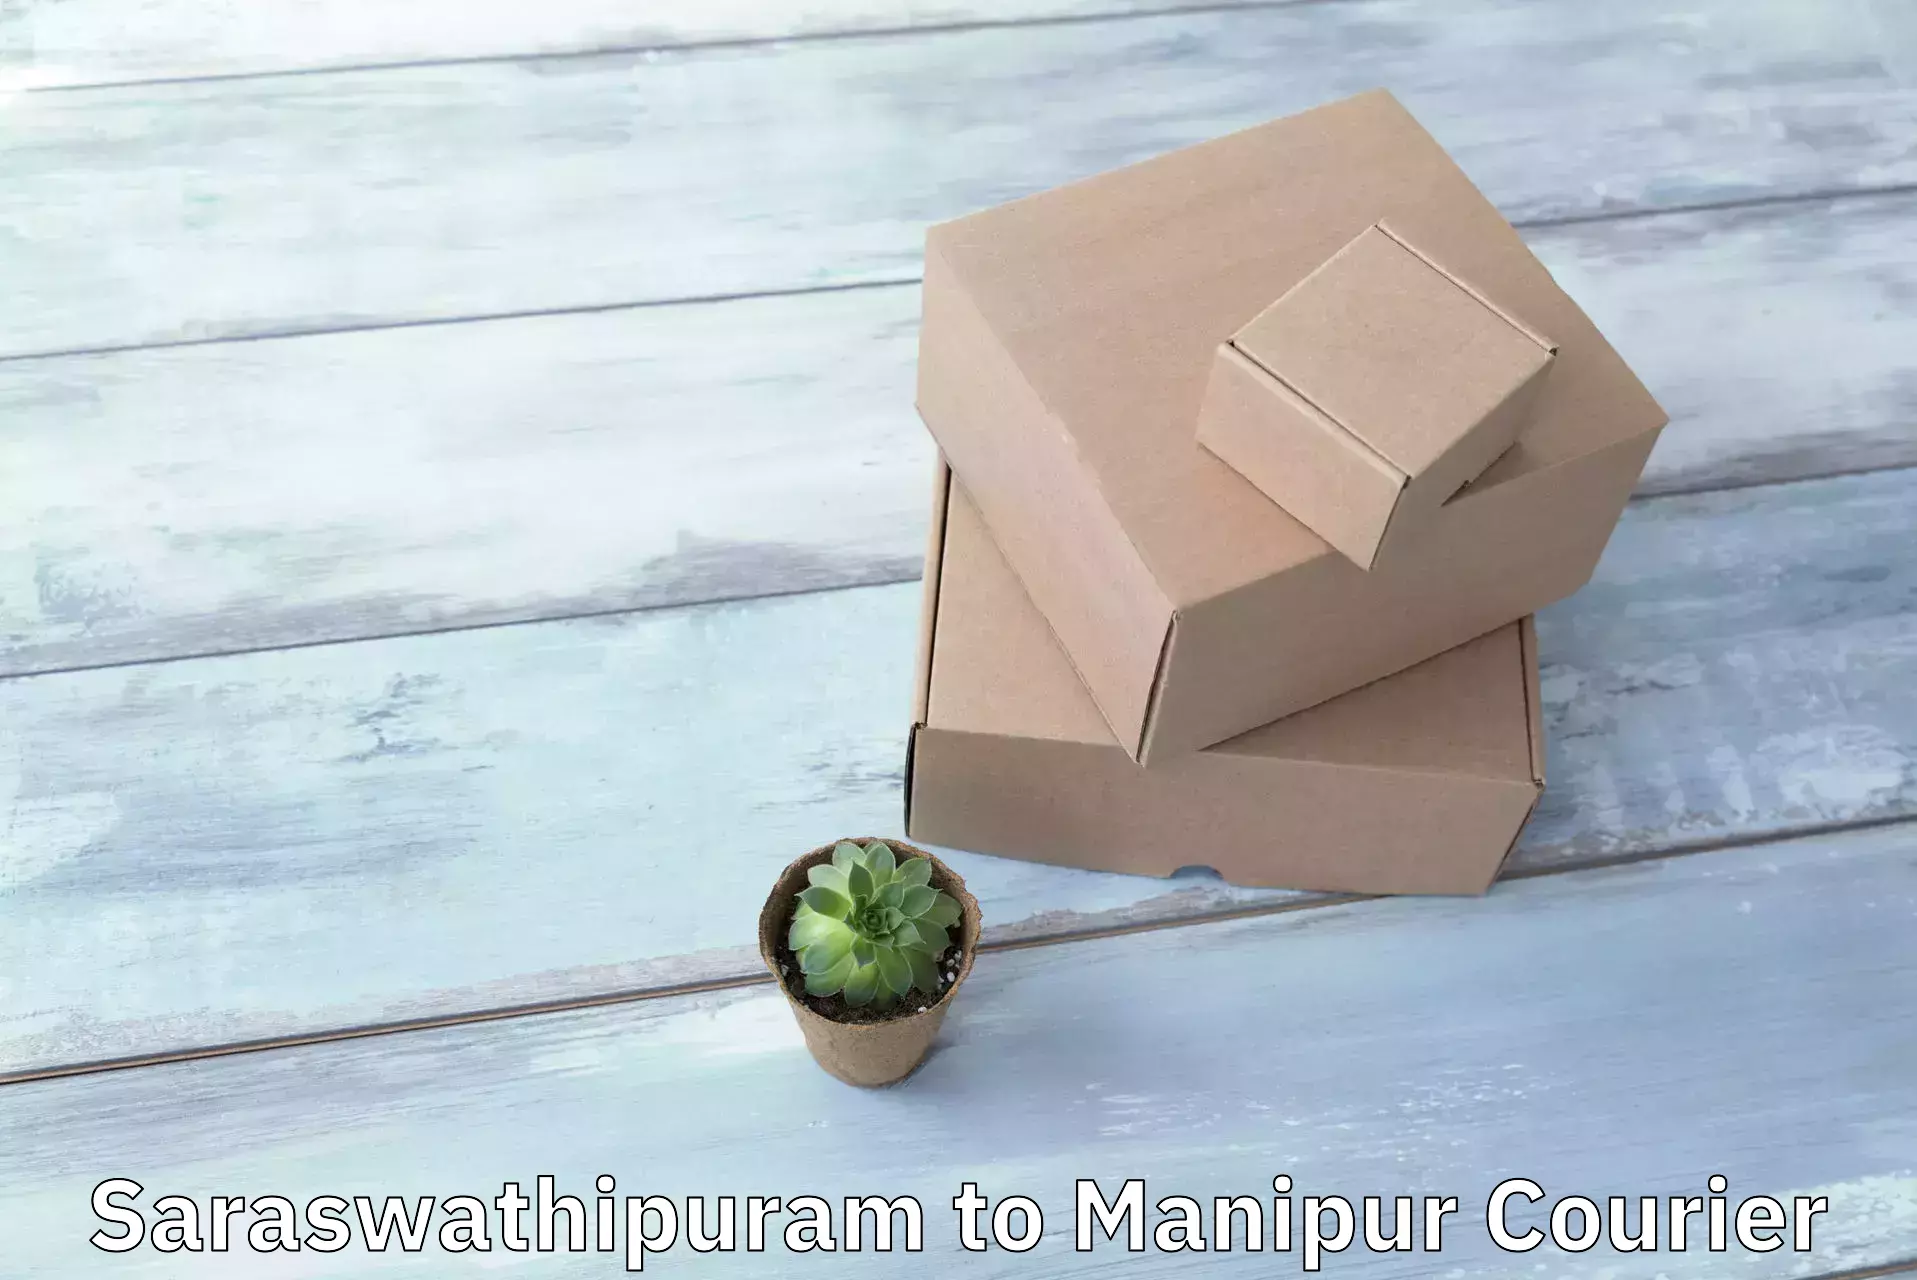 Package delivery network Saraswathipuram to Tadubi